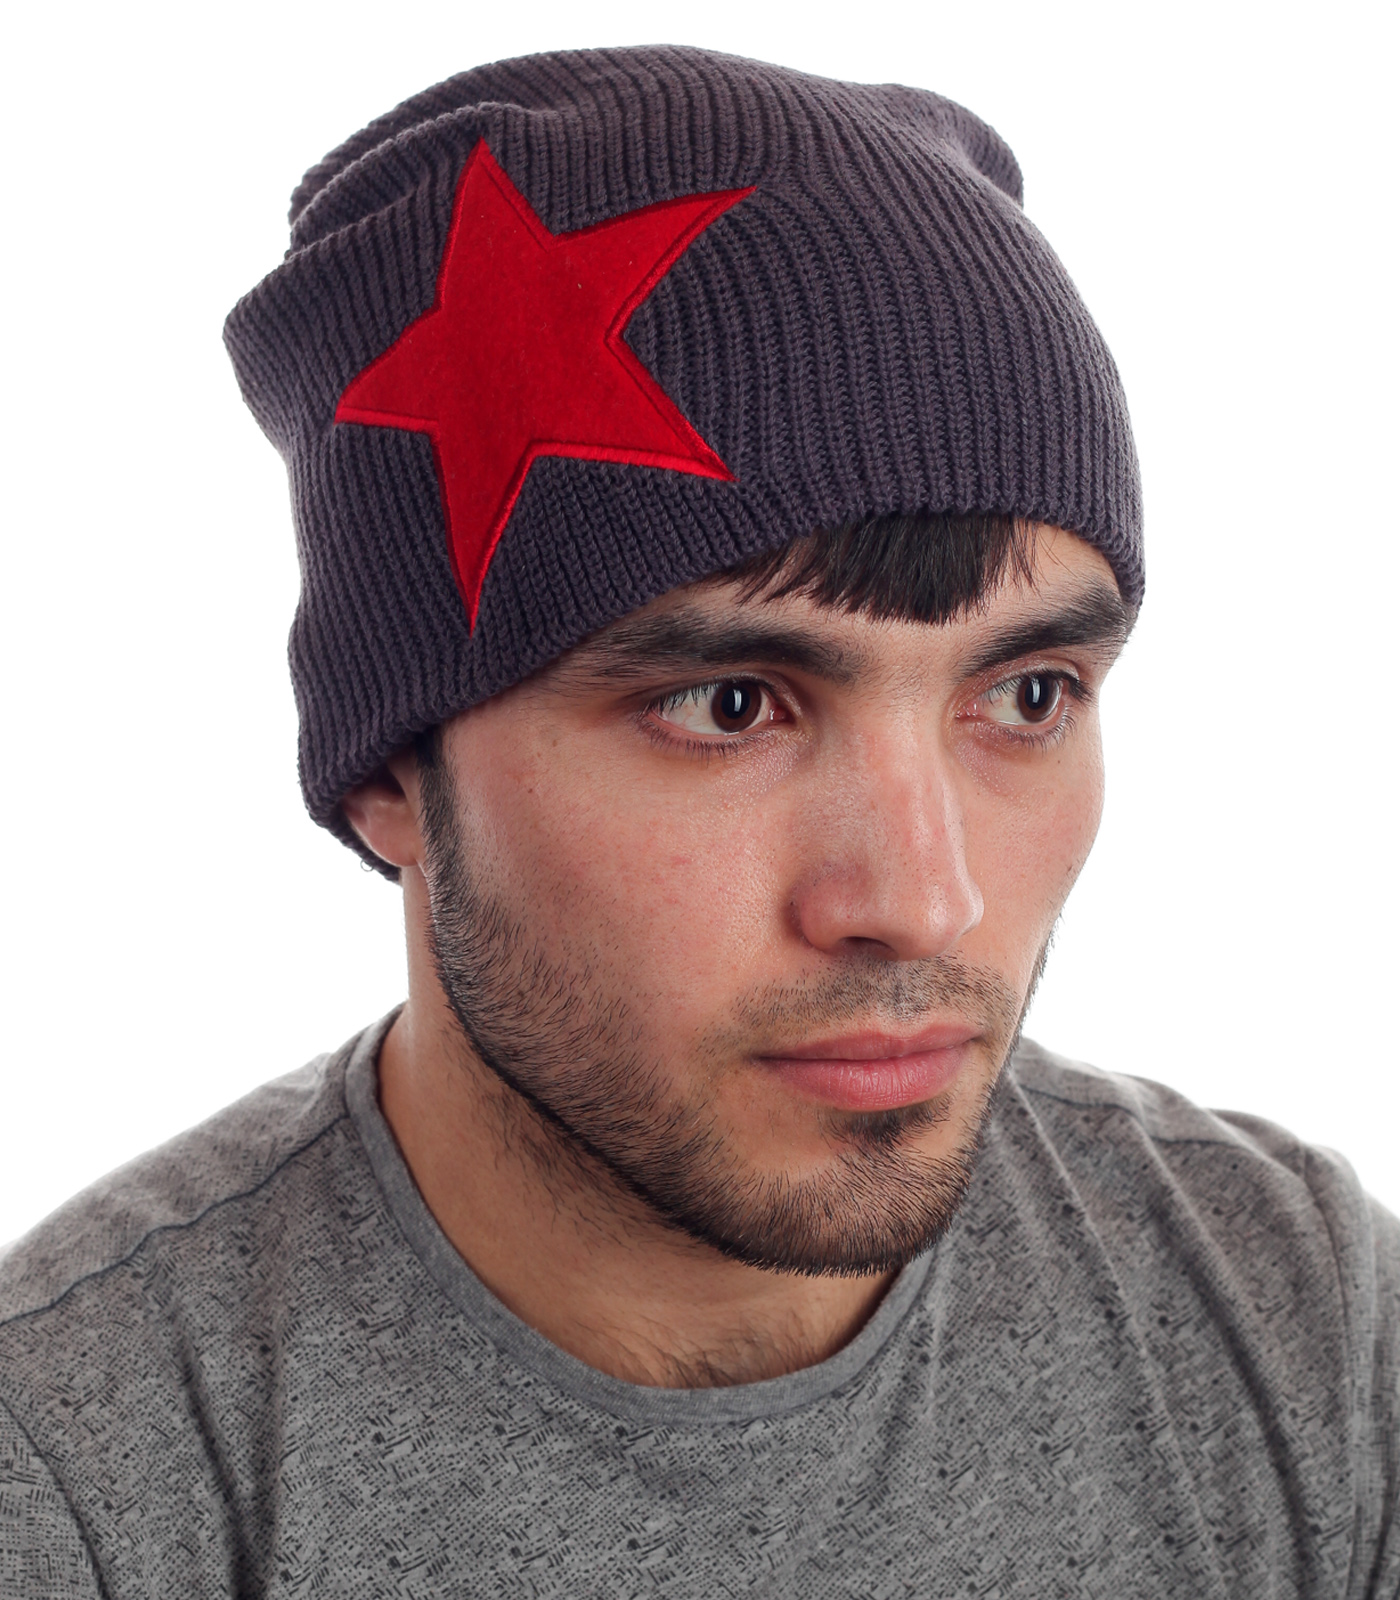 Шапка трикотажная мужская. Мужские вязаные шапки. Звезды в шапках. Красная вязаная шапка мужская.